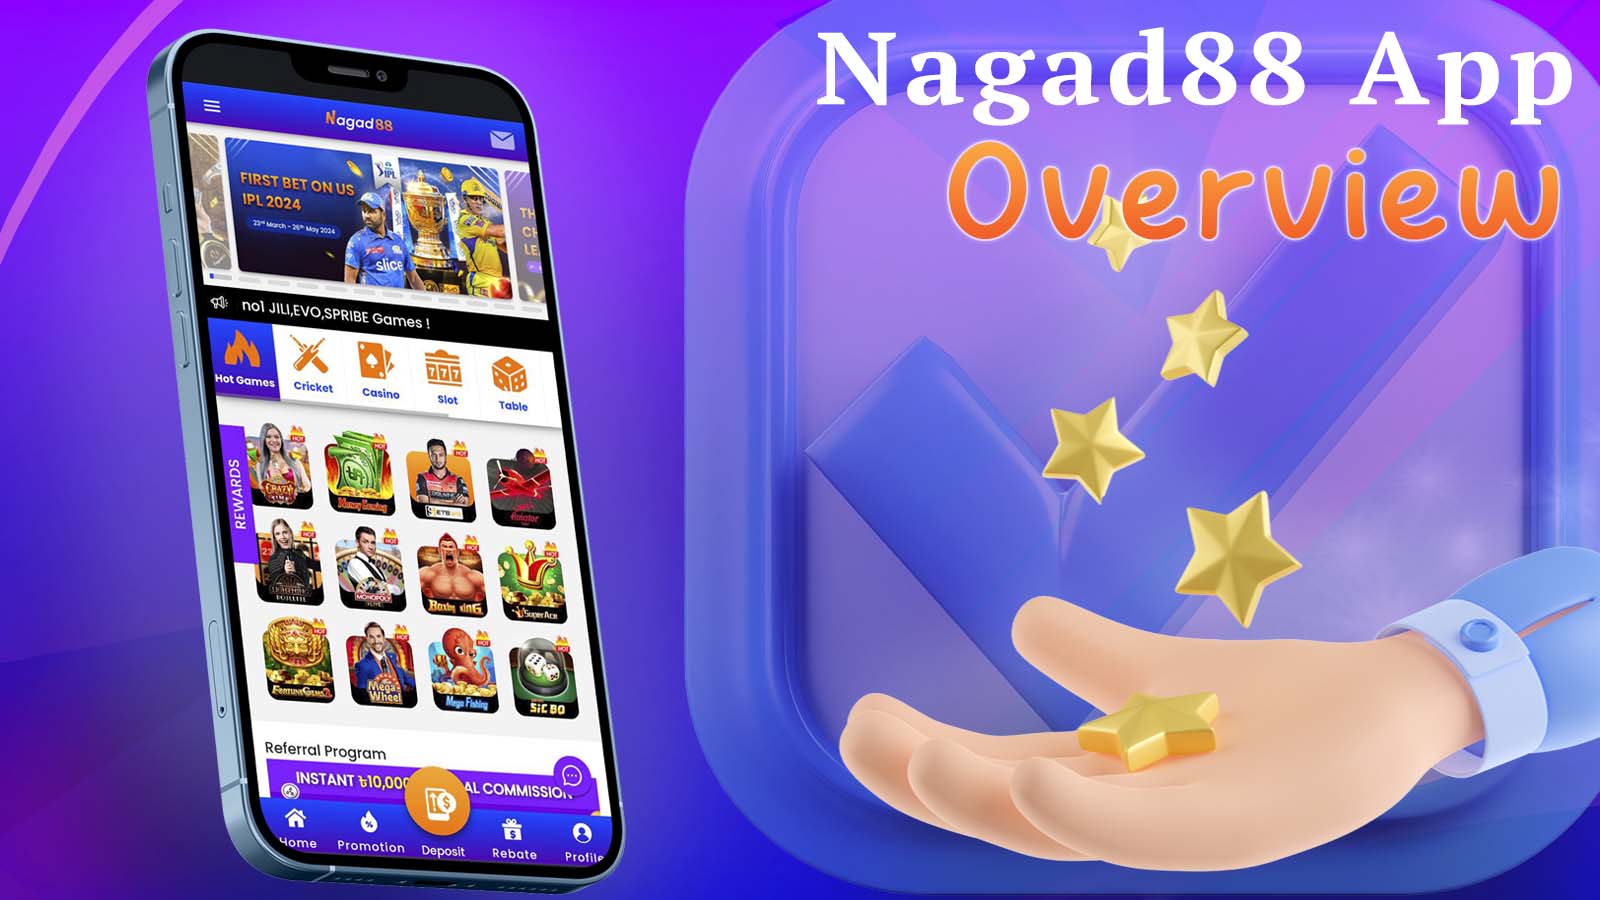 Nagad88 mobile app review